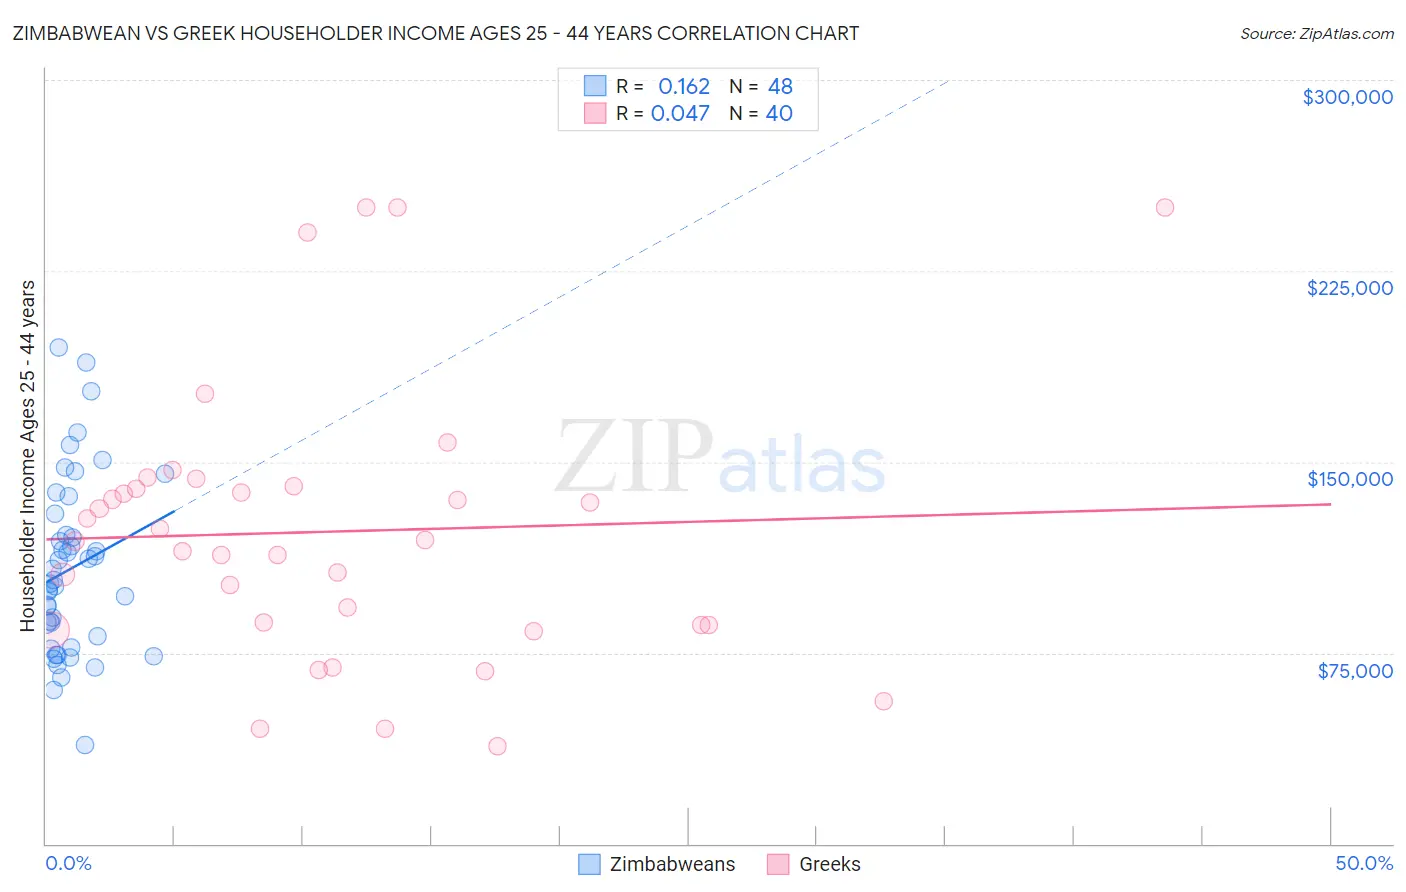 Zimbabwean vs Greek Householder Income Ages 25 - 44 years